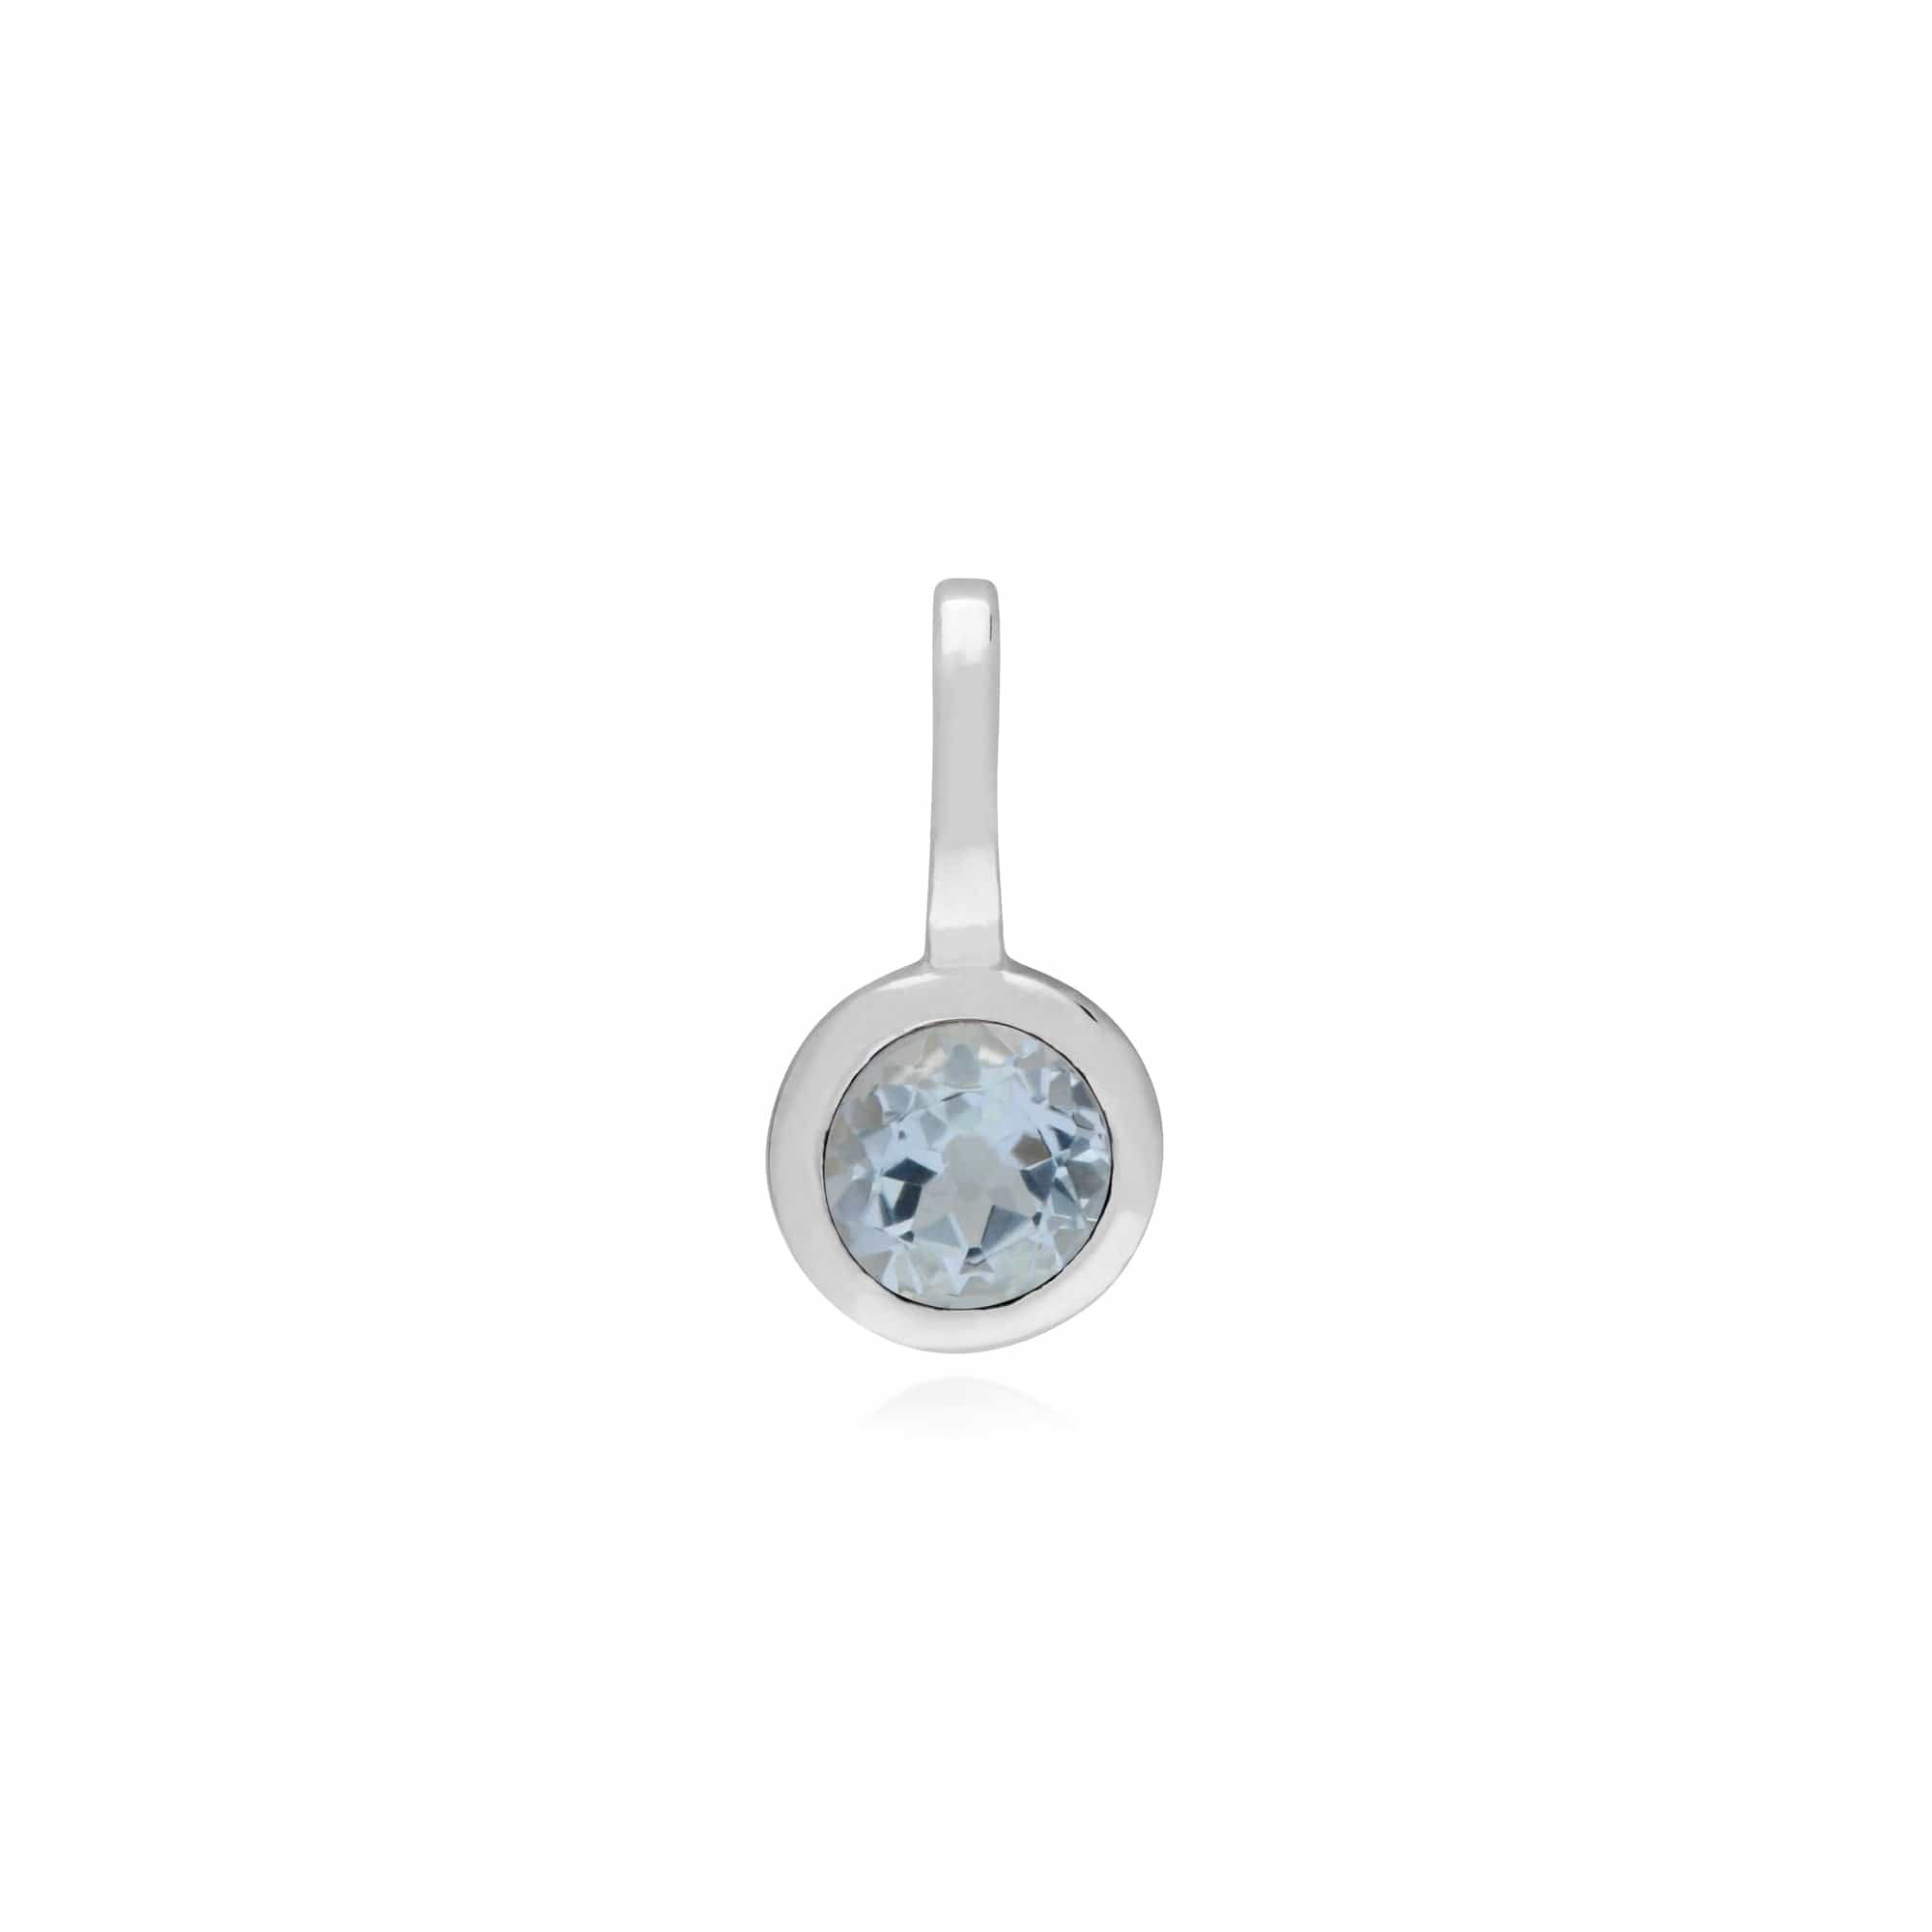 270P027607925-270P027001925 Classic Heart Lock Pendant & Aquamarine Charm in 925 Sterling Silver 2